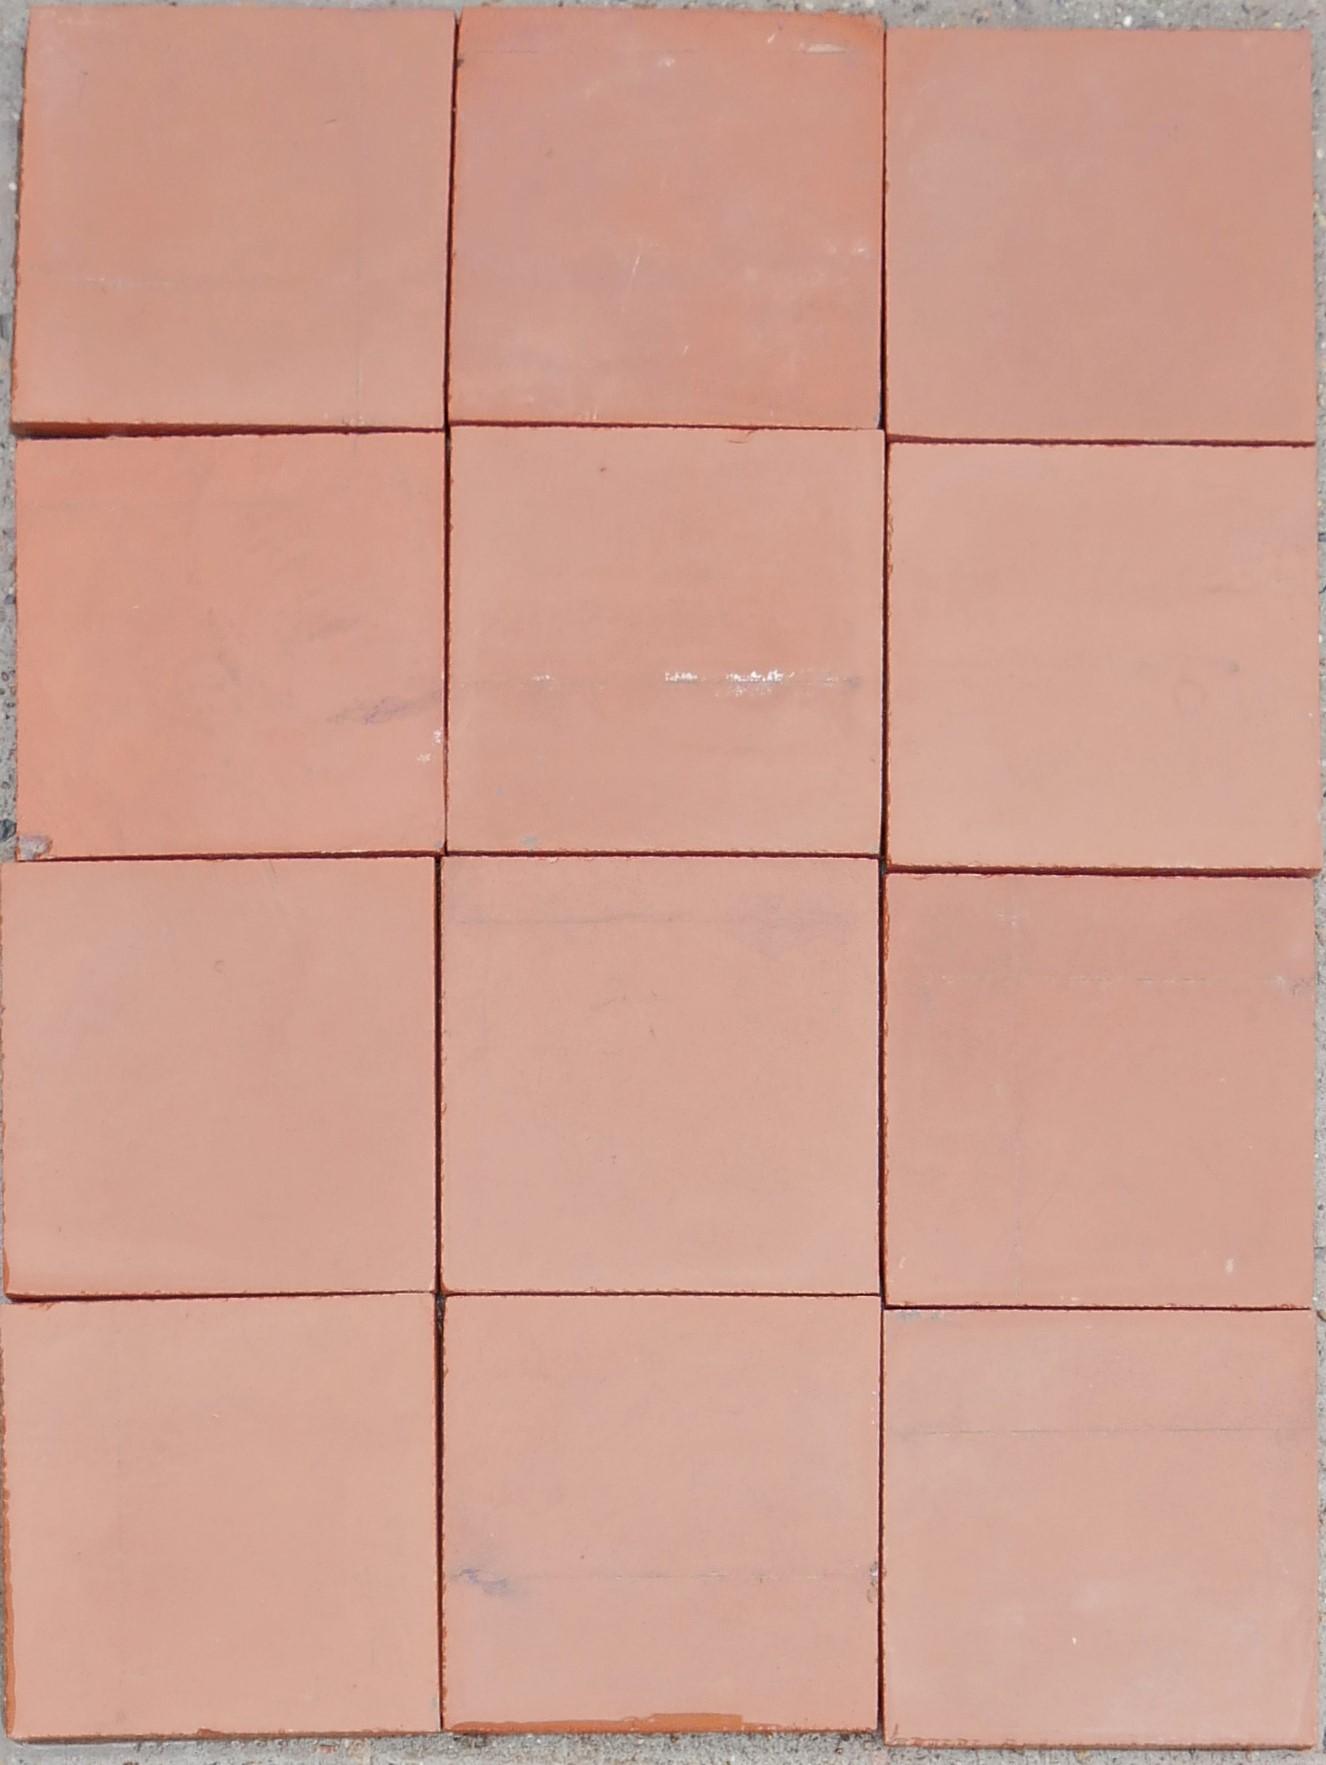 5 8 M Ceramic Floor Tiles Red 2 Historische Bauelemente Jetzt